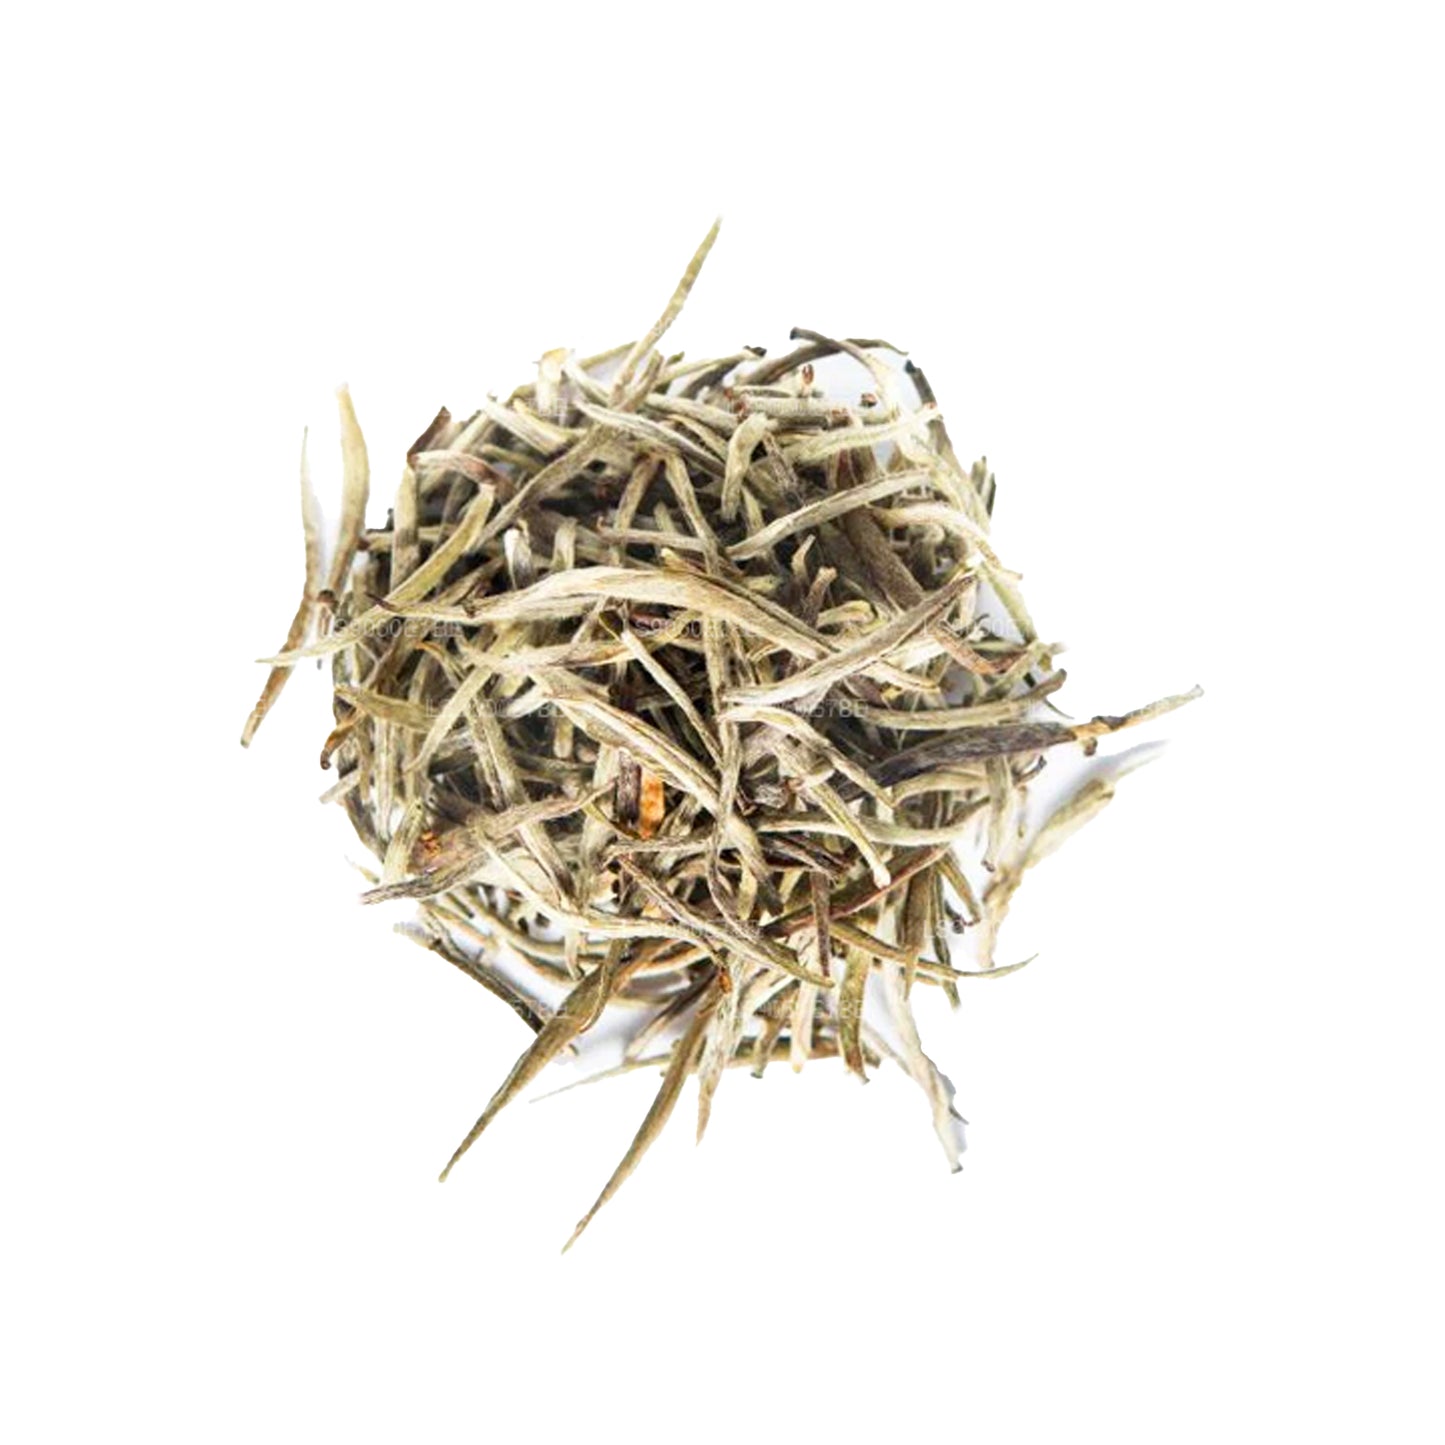 Dilmah Ceylon Silver Tips White Tea (40g) Caddy Loose Tea